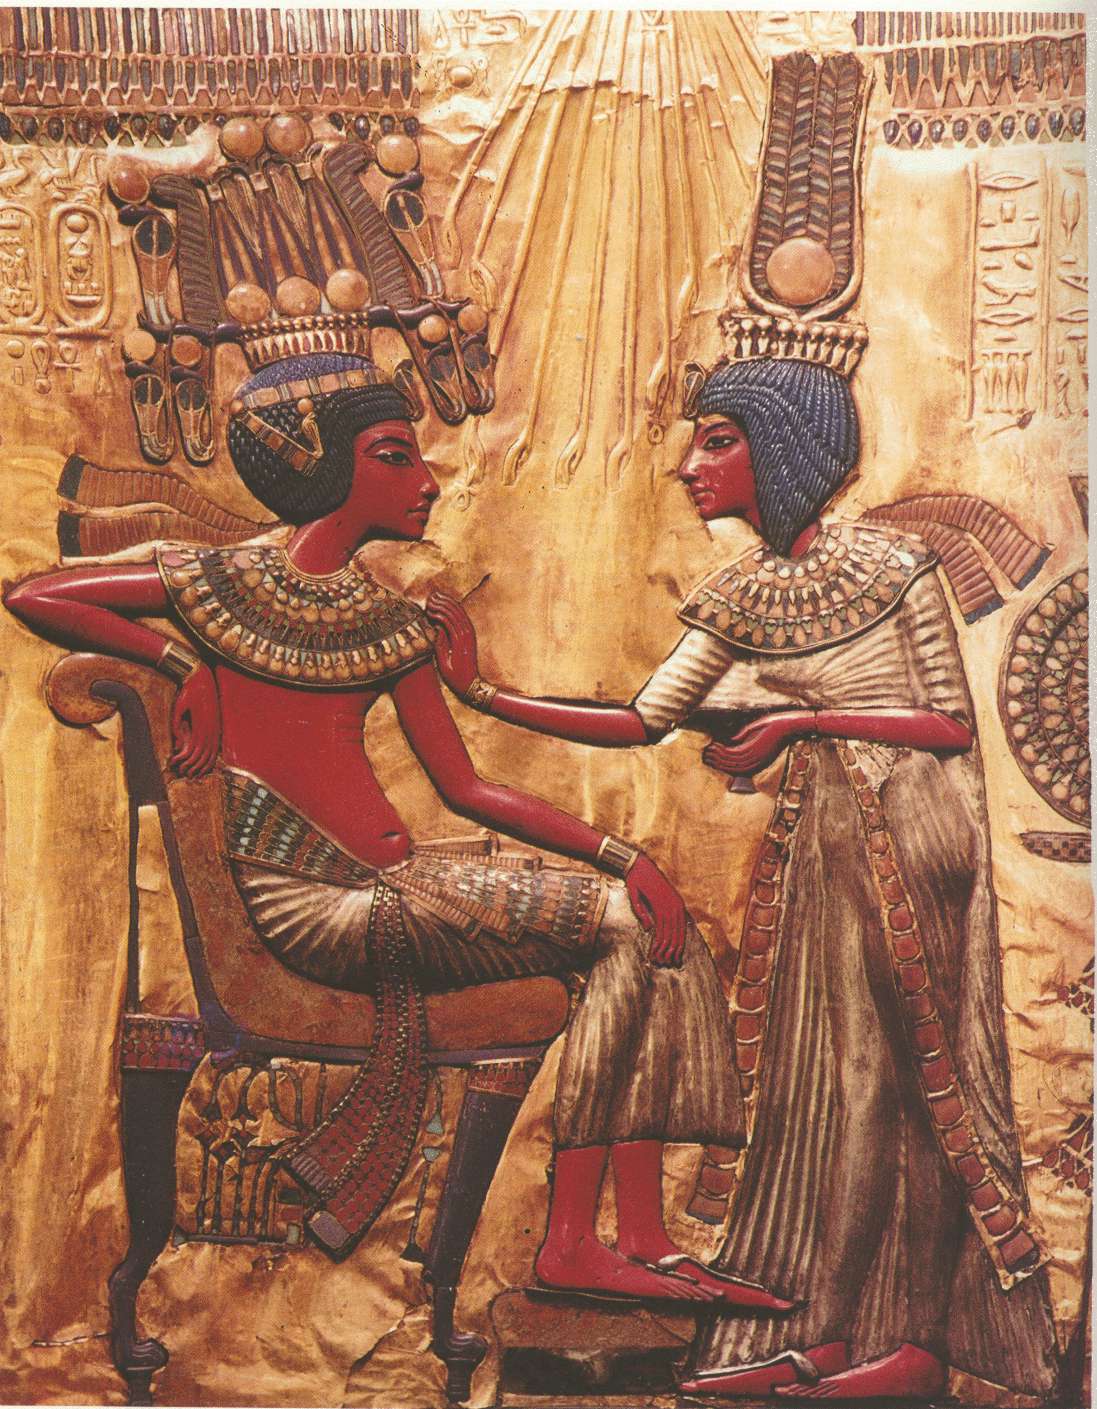 Tutankhamun and Ankhsenamun as depicted on Tutankhamun's throne - Around 1325 BCE